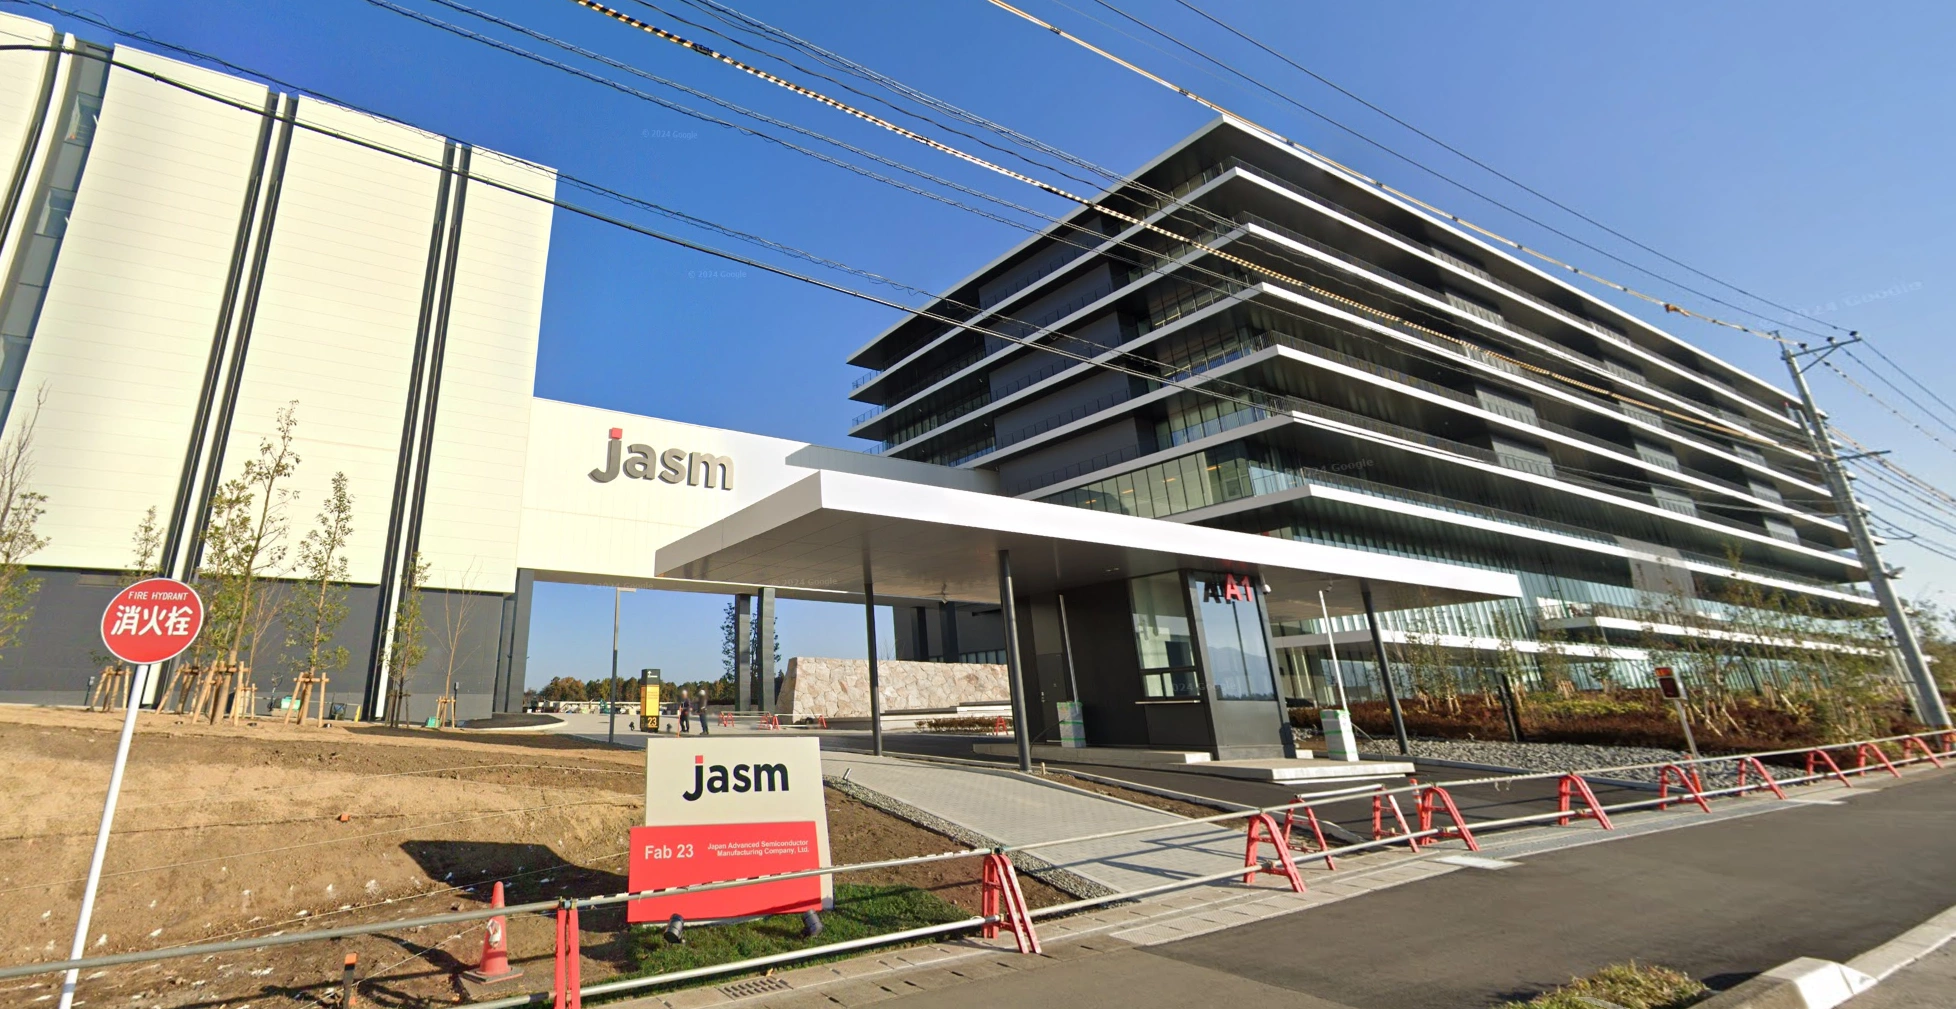 Jasm Fab 23 Japon Google Streetview